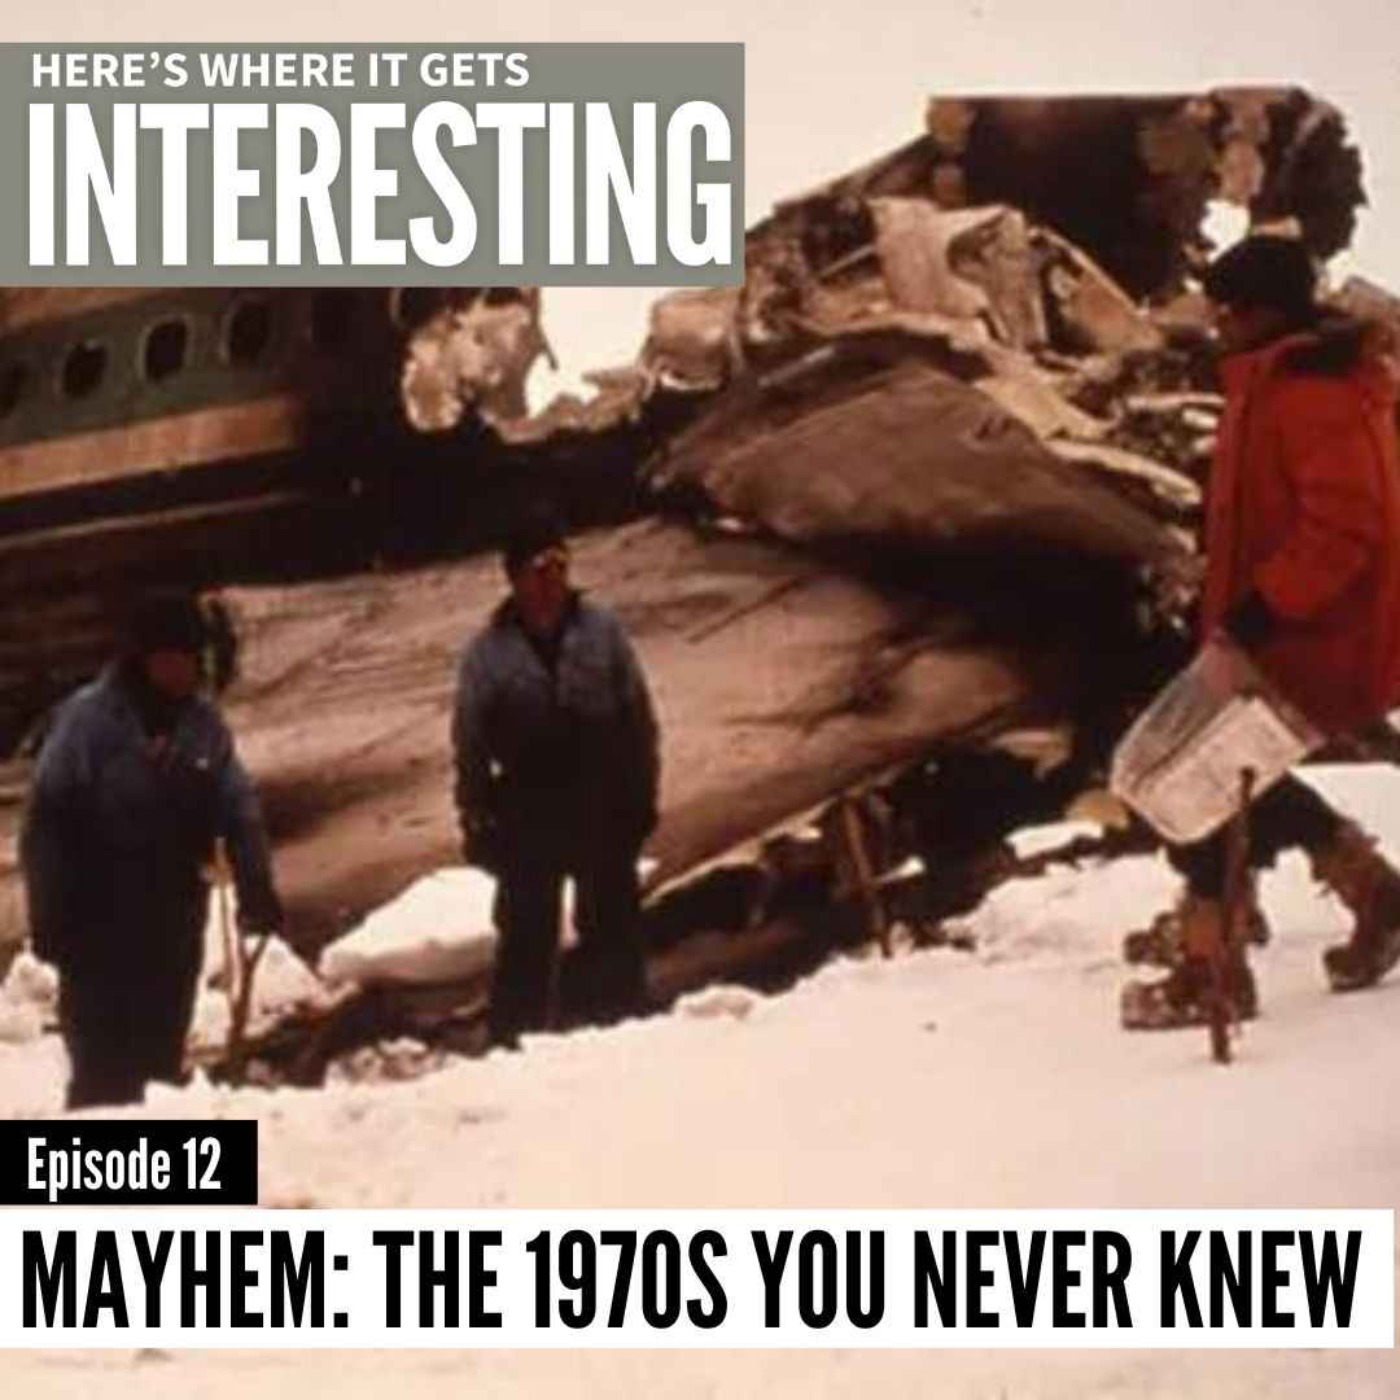 Mayhem: The 1970s You Never Knew, Episode 12